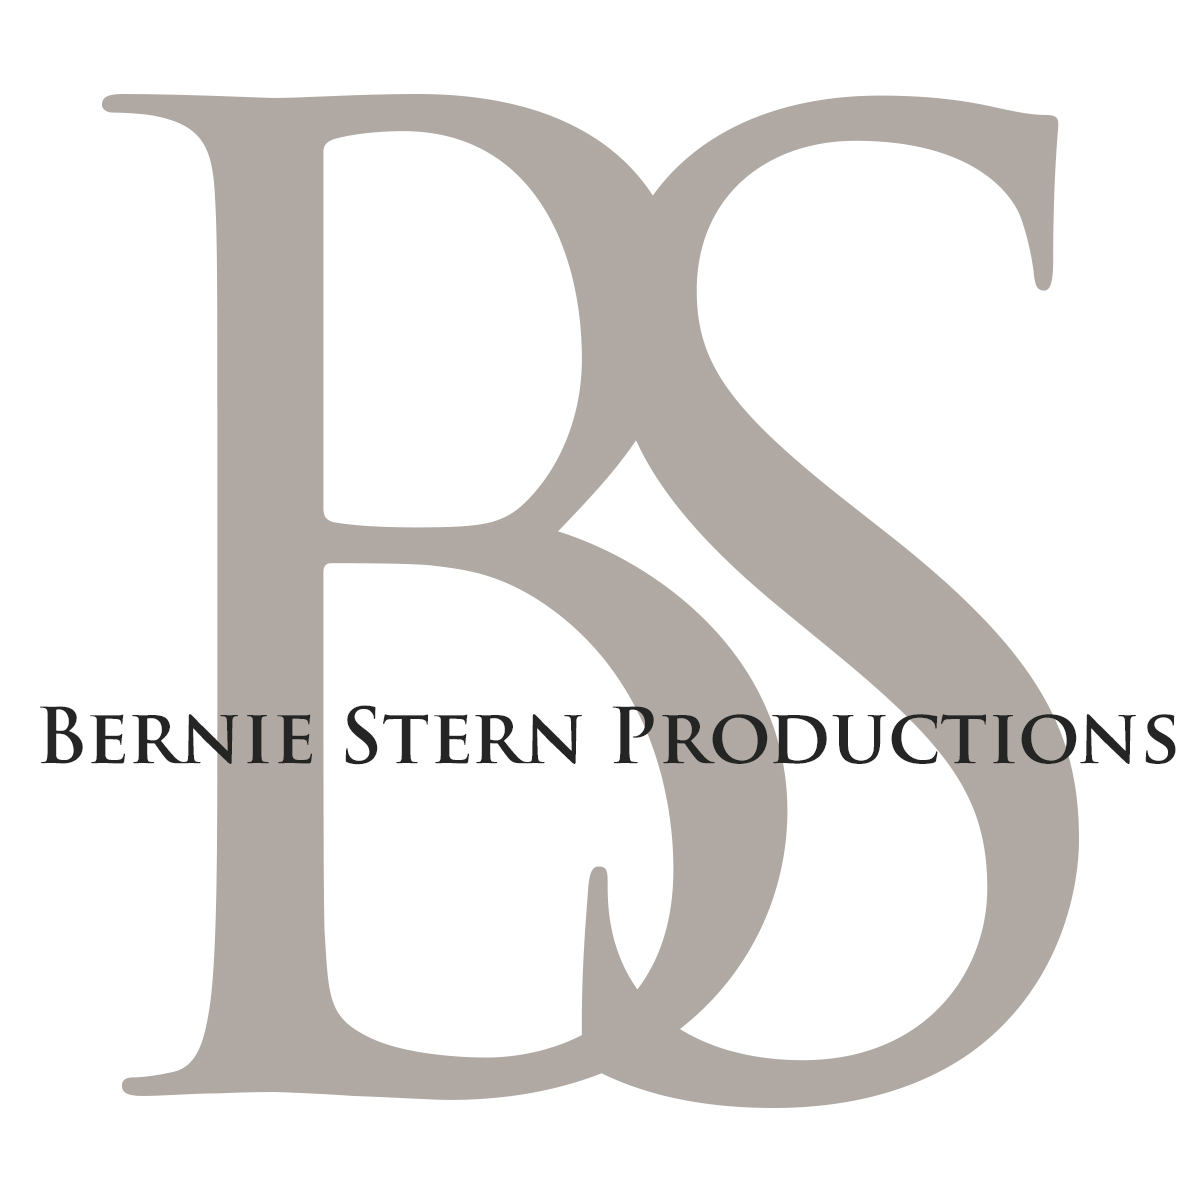 Bernie Stern Productions